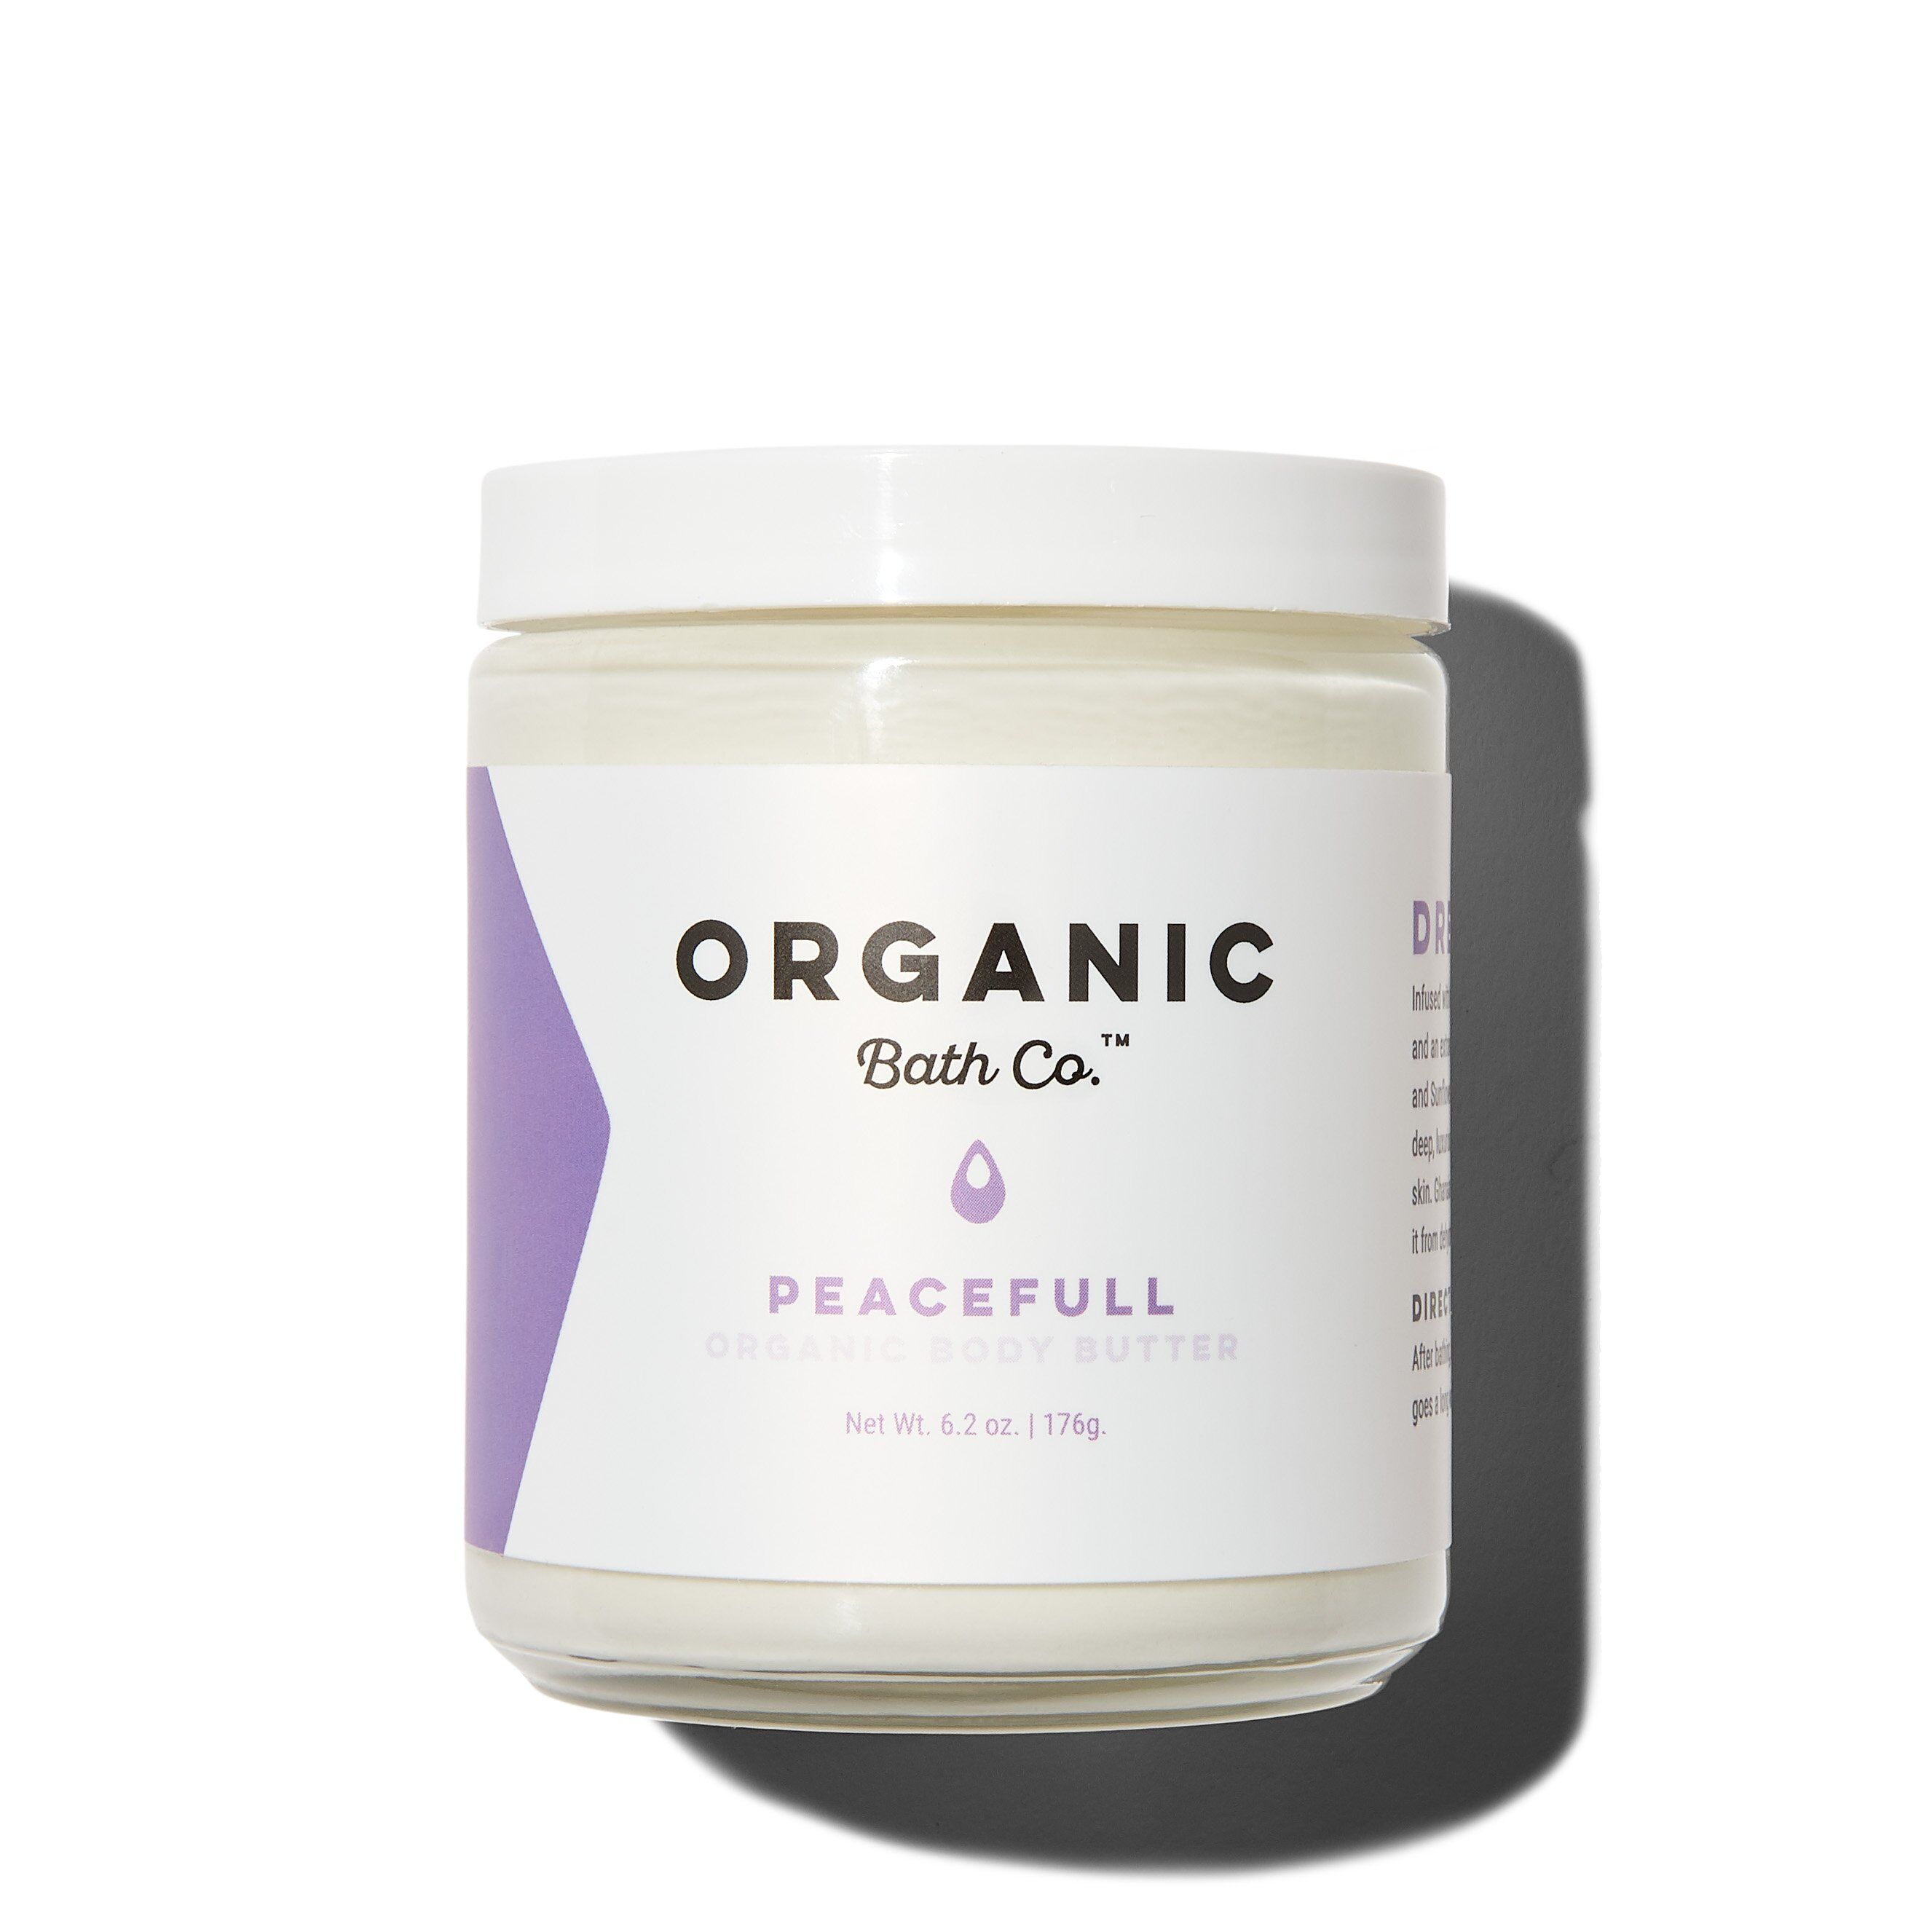 Organic Bath Co. - PeaceFull Organic Body Butter